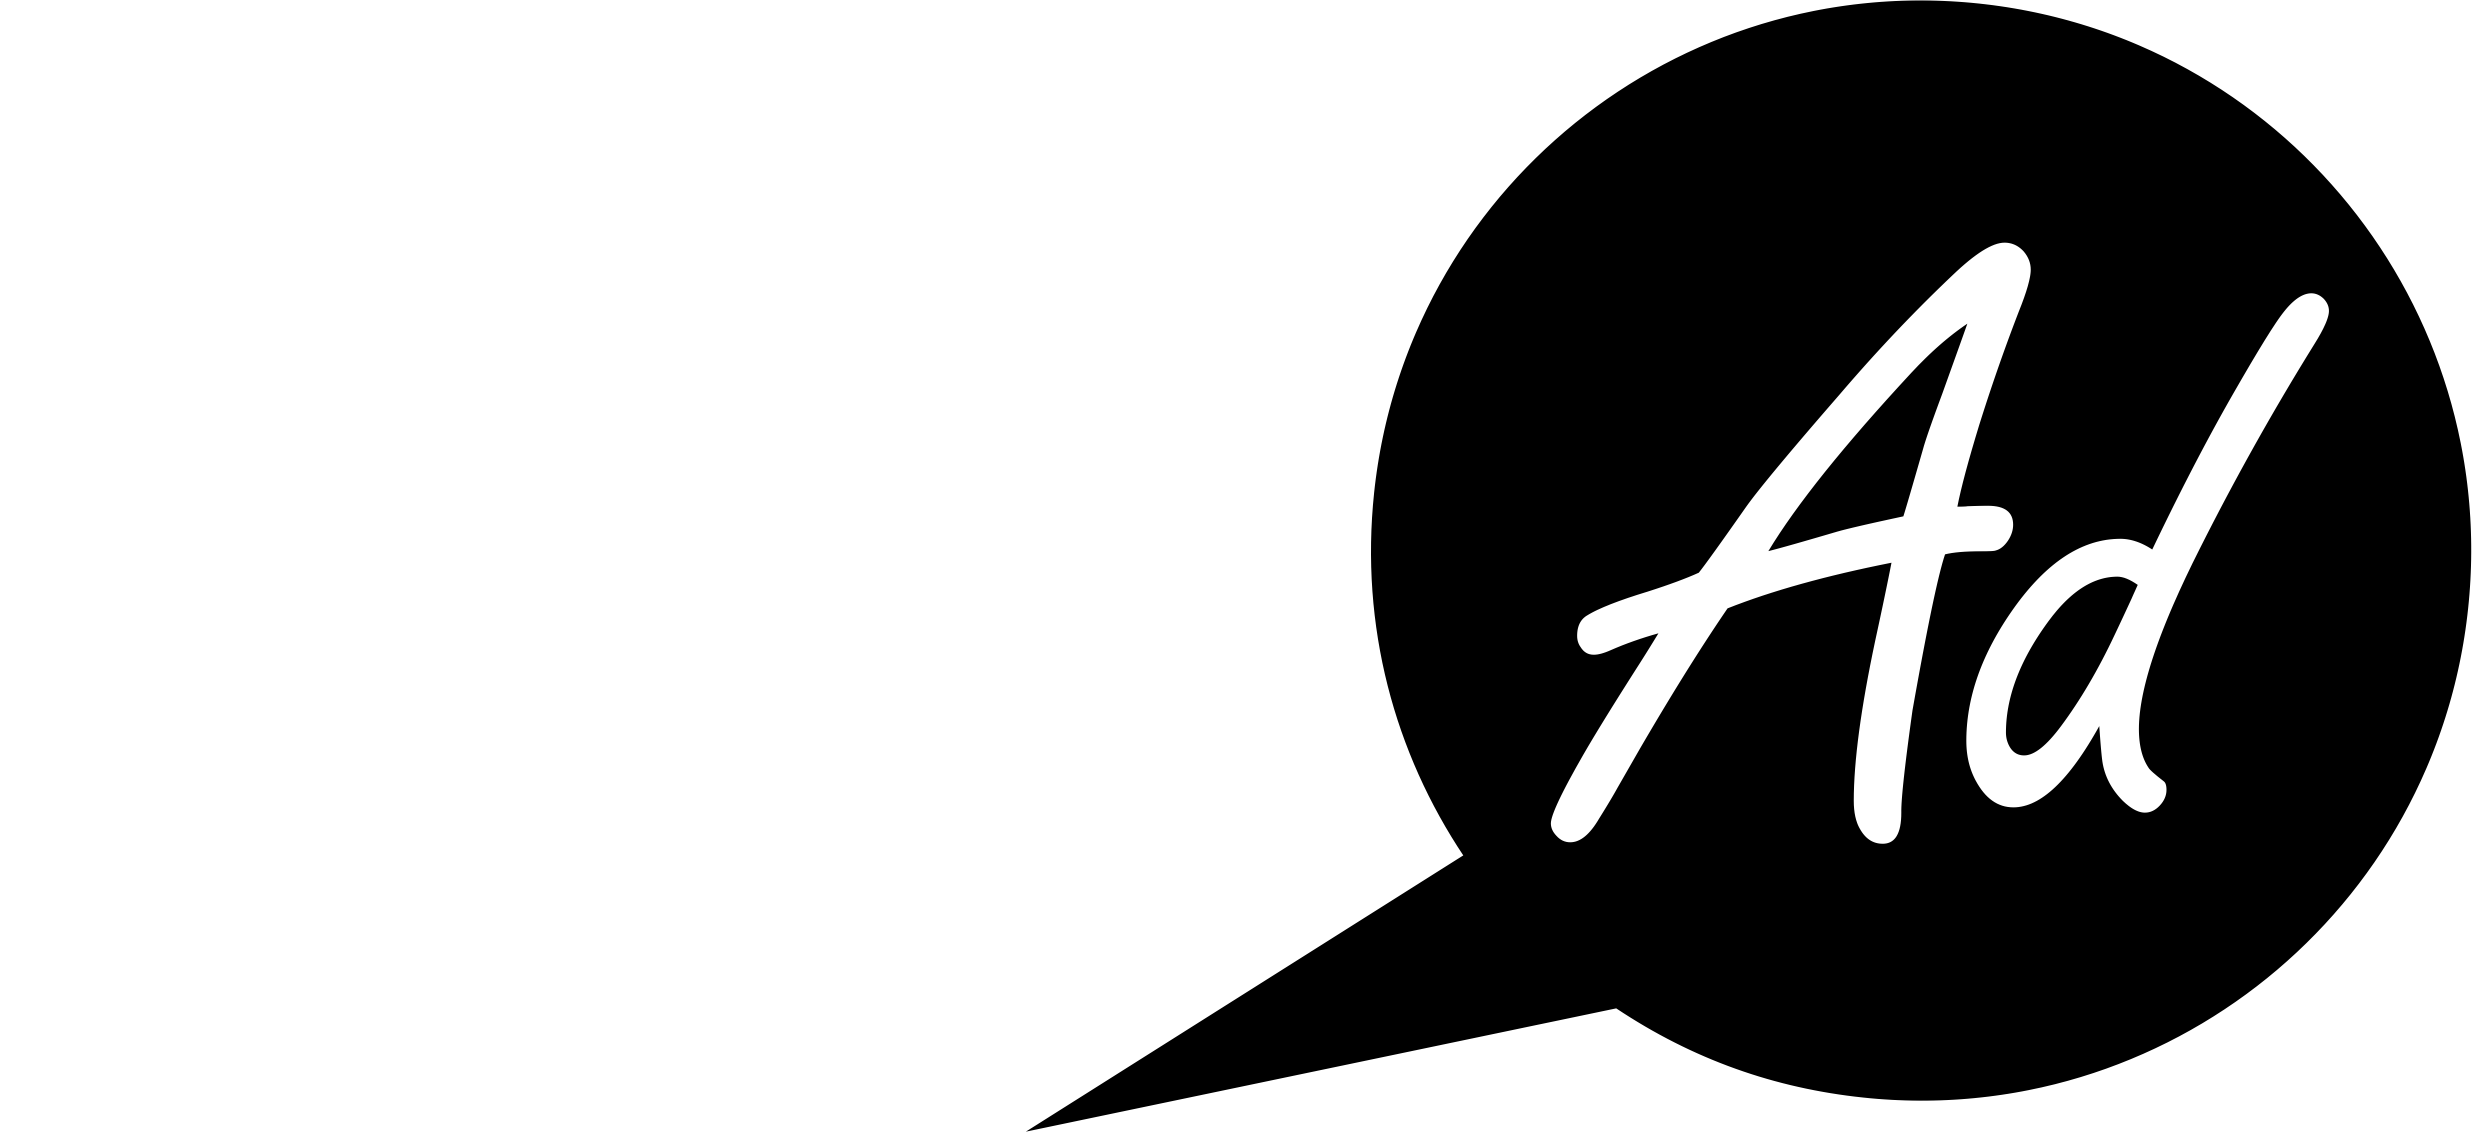 LikeAd_logo